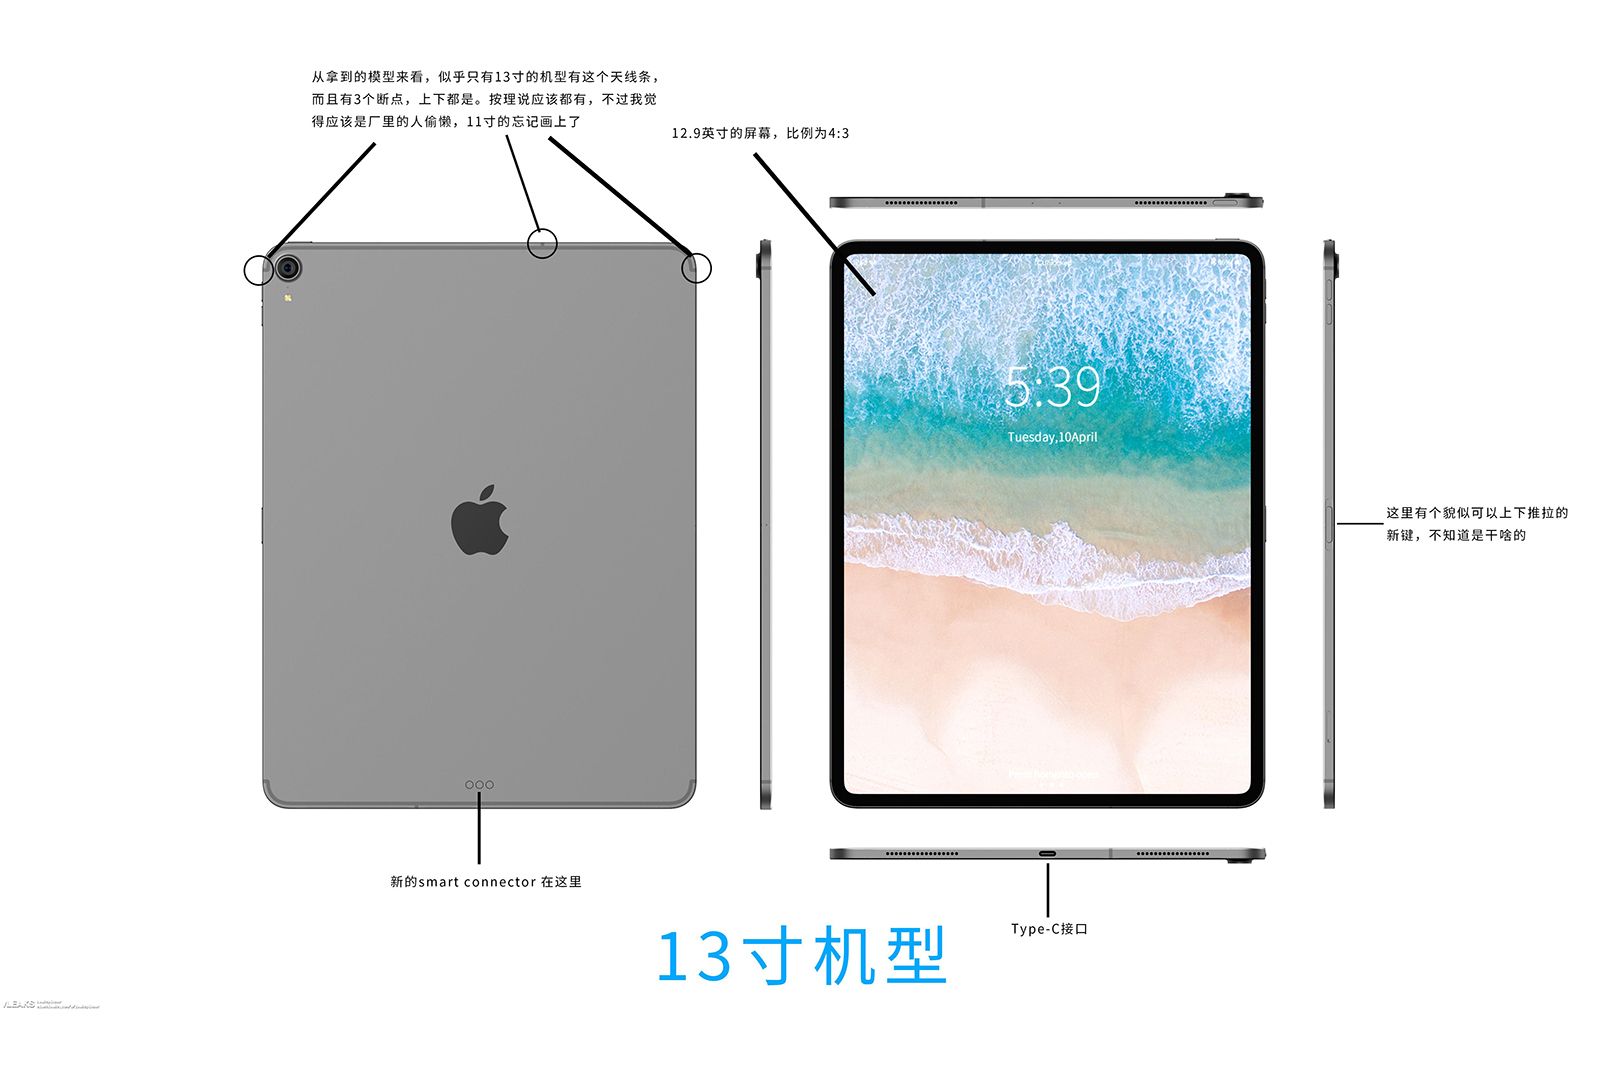 iPad Pro specs and CAD image leak again shows USB-C not Lightning image 4